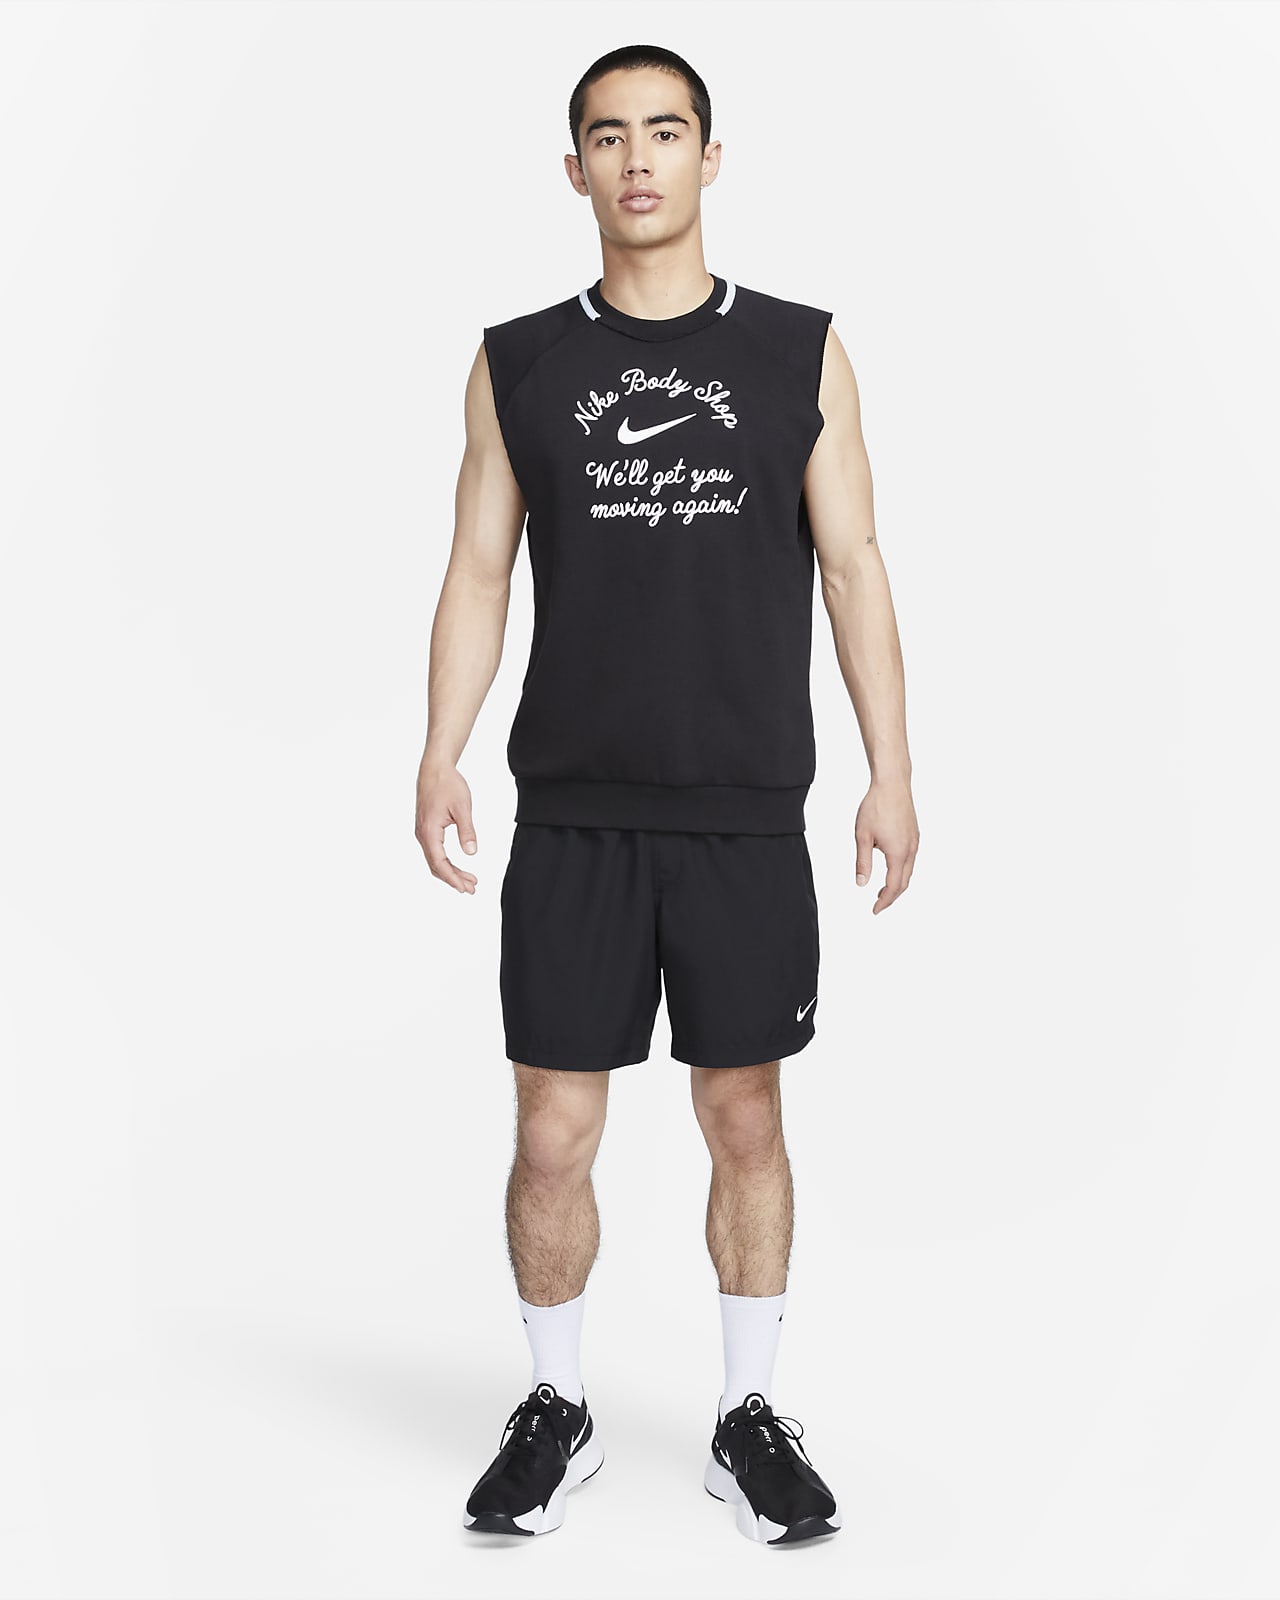  Nike Pro Dri-FIT Men's Tight Fit Sleeveless Tank Top (Medium,  Dark Gray/Black) : Clothing, Shoes & Jewelry